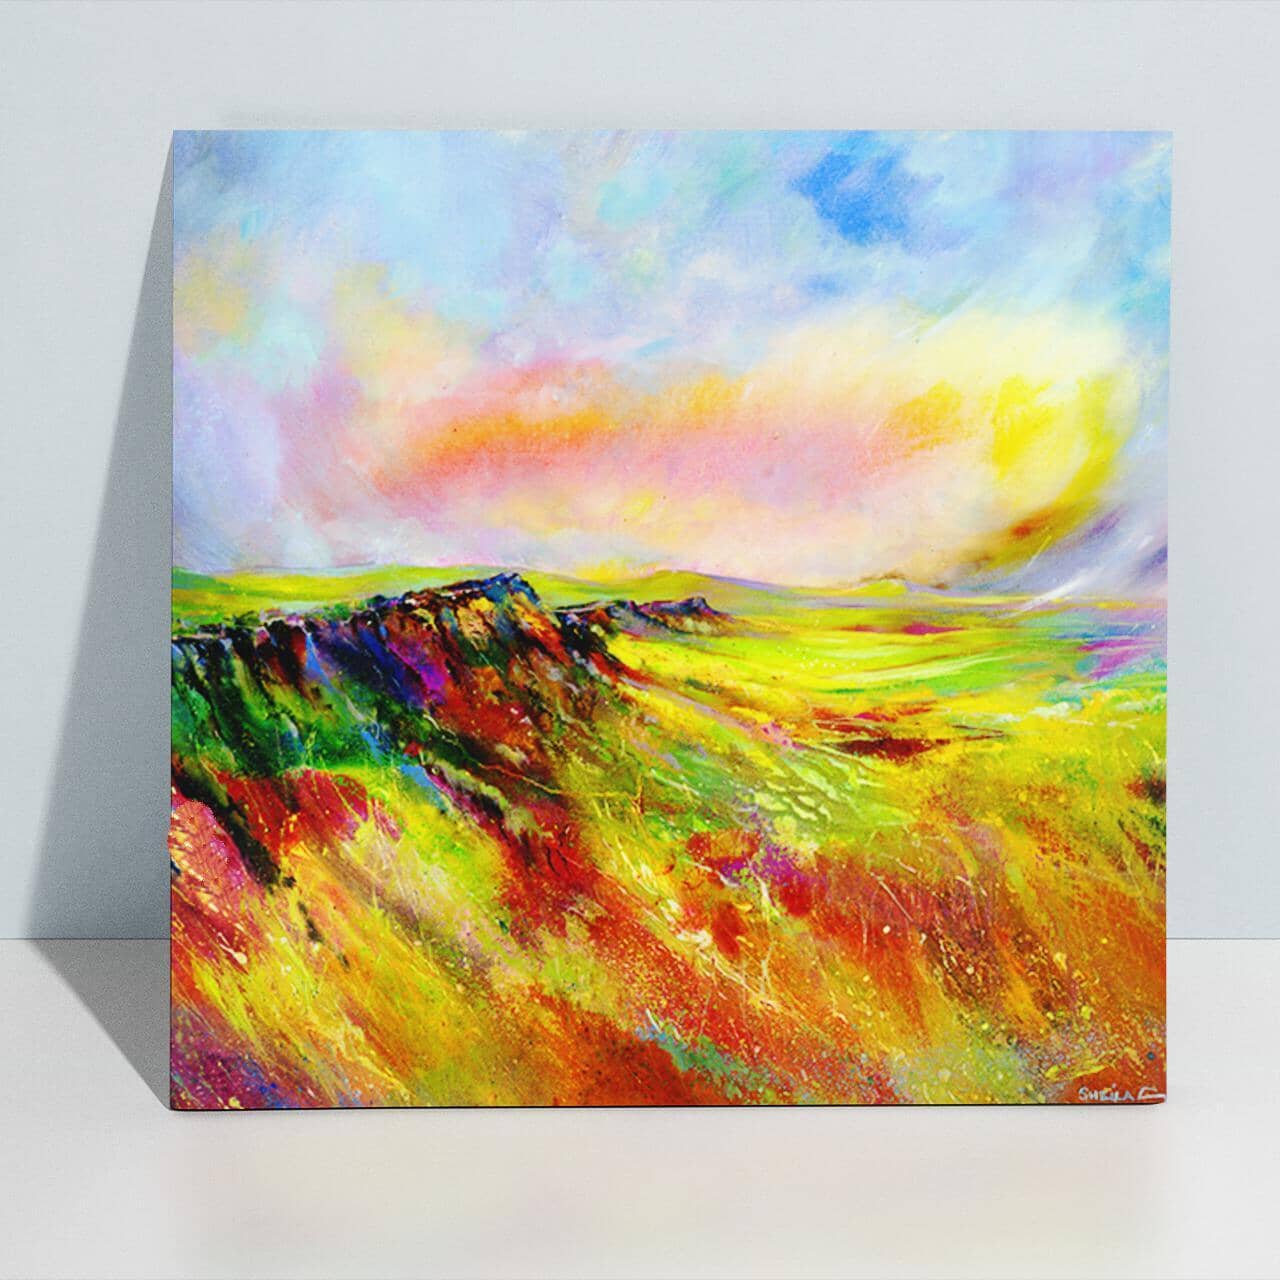 Curbar Edge, Peak District - Landscape Canvas Art Print designed by artist Sheila Gill
